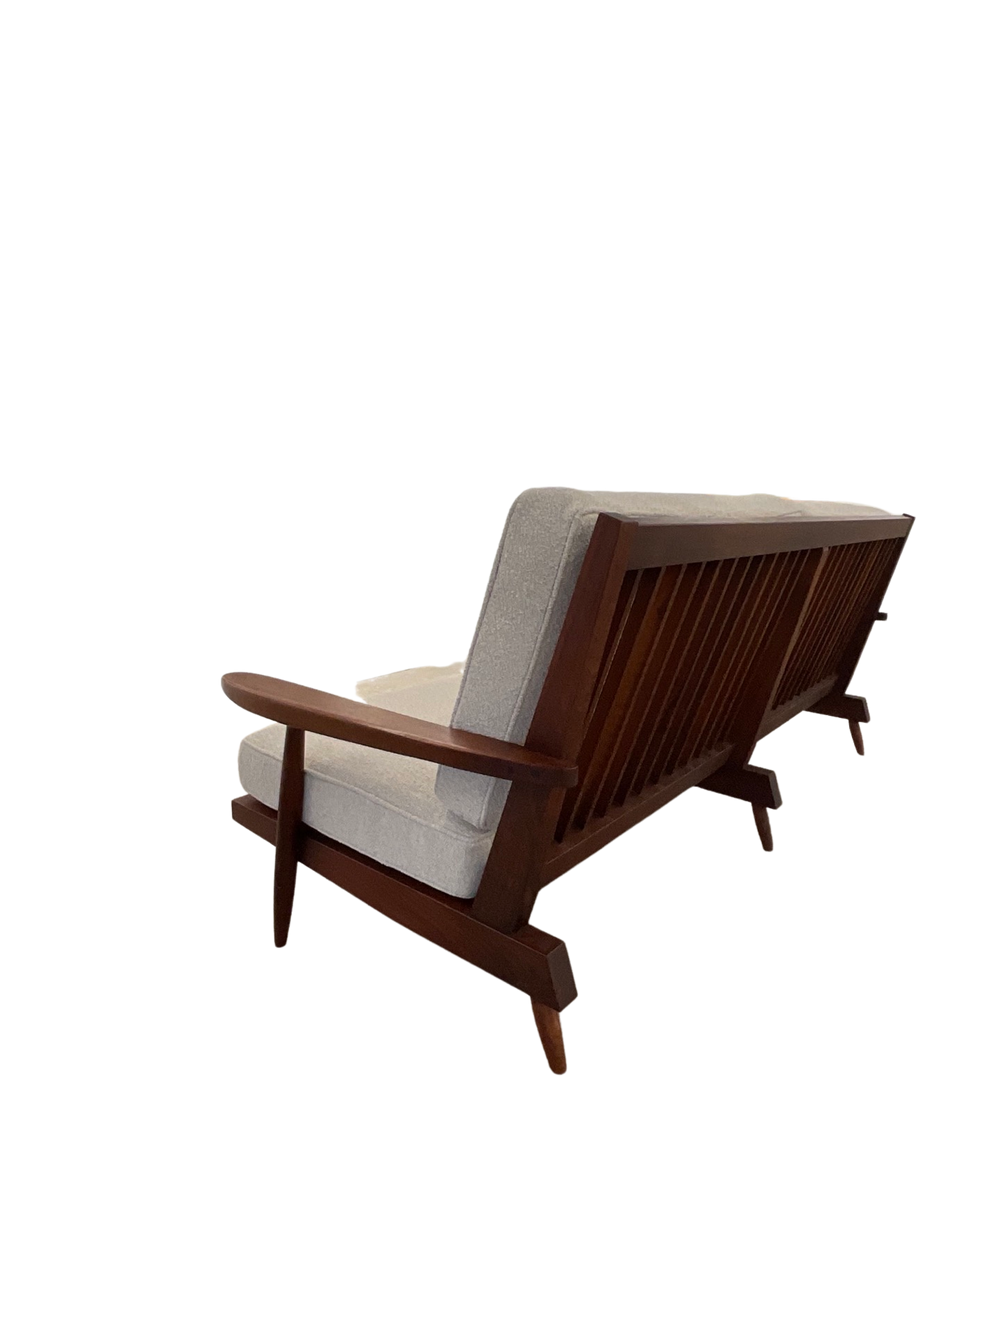 George Nakashima “Cushion” three seat walnut sofa with arms, USA, 1961